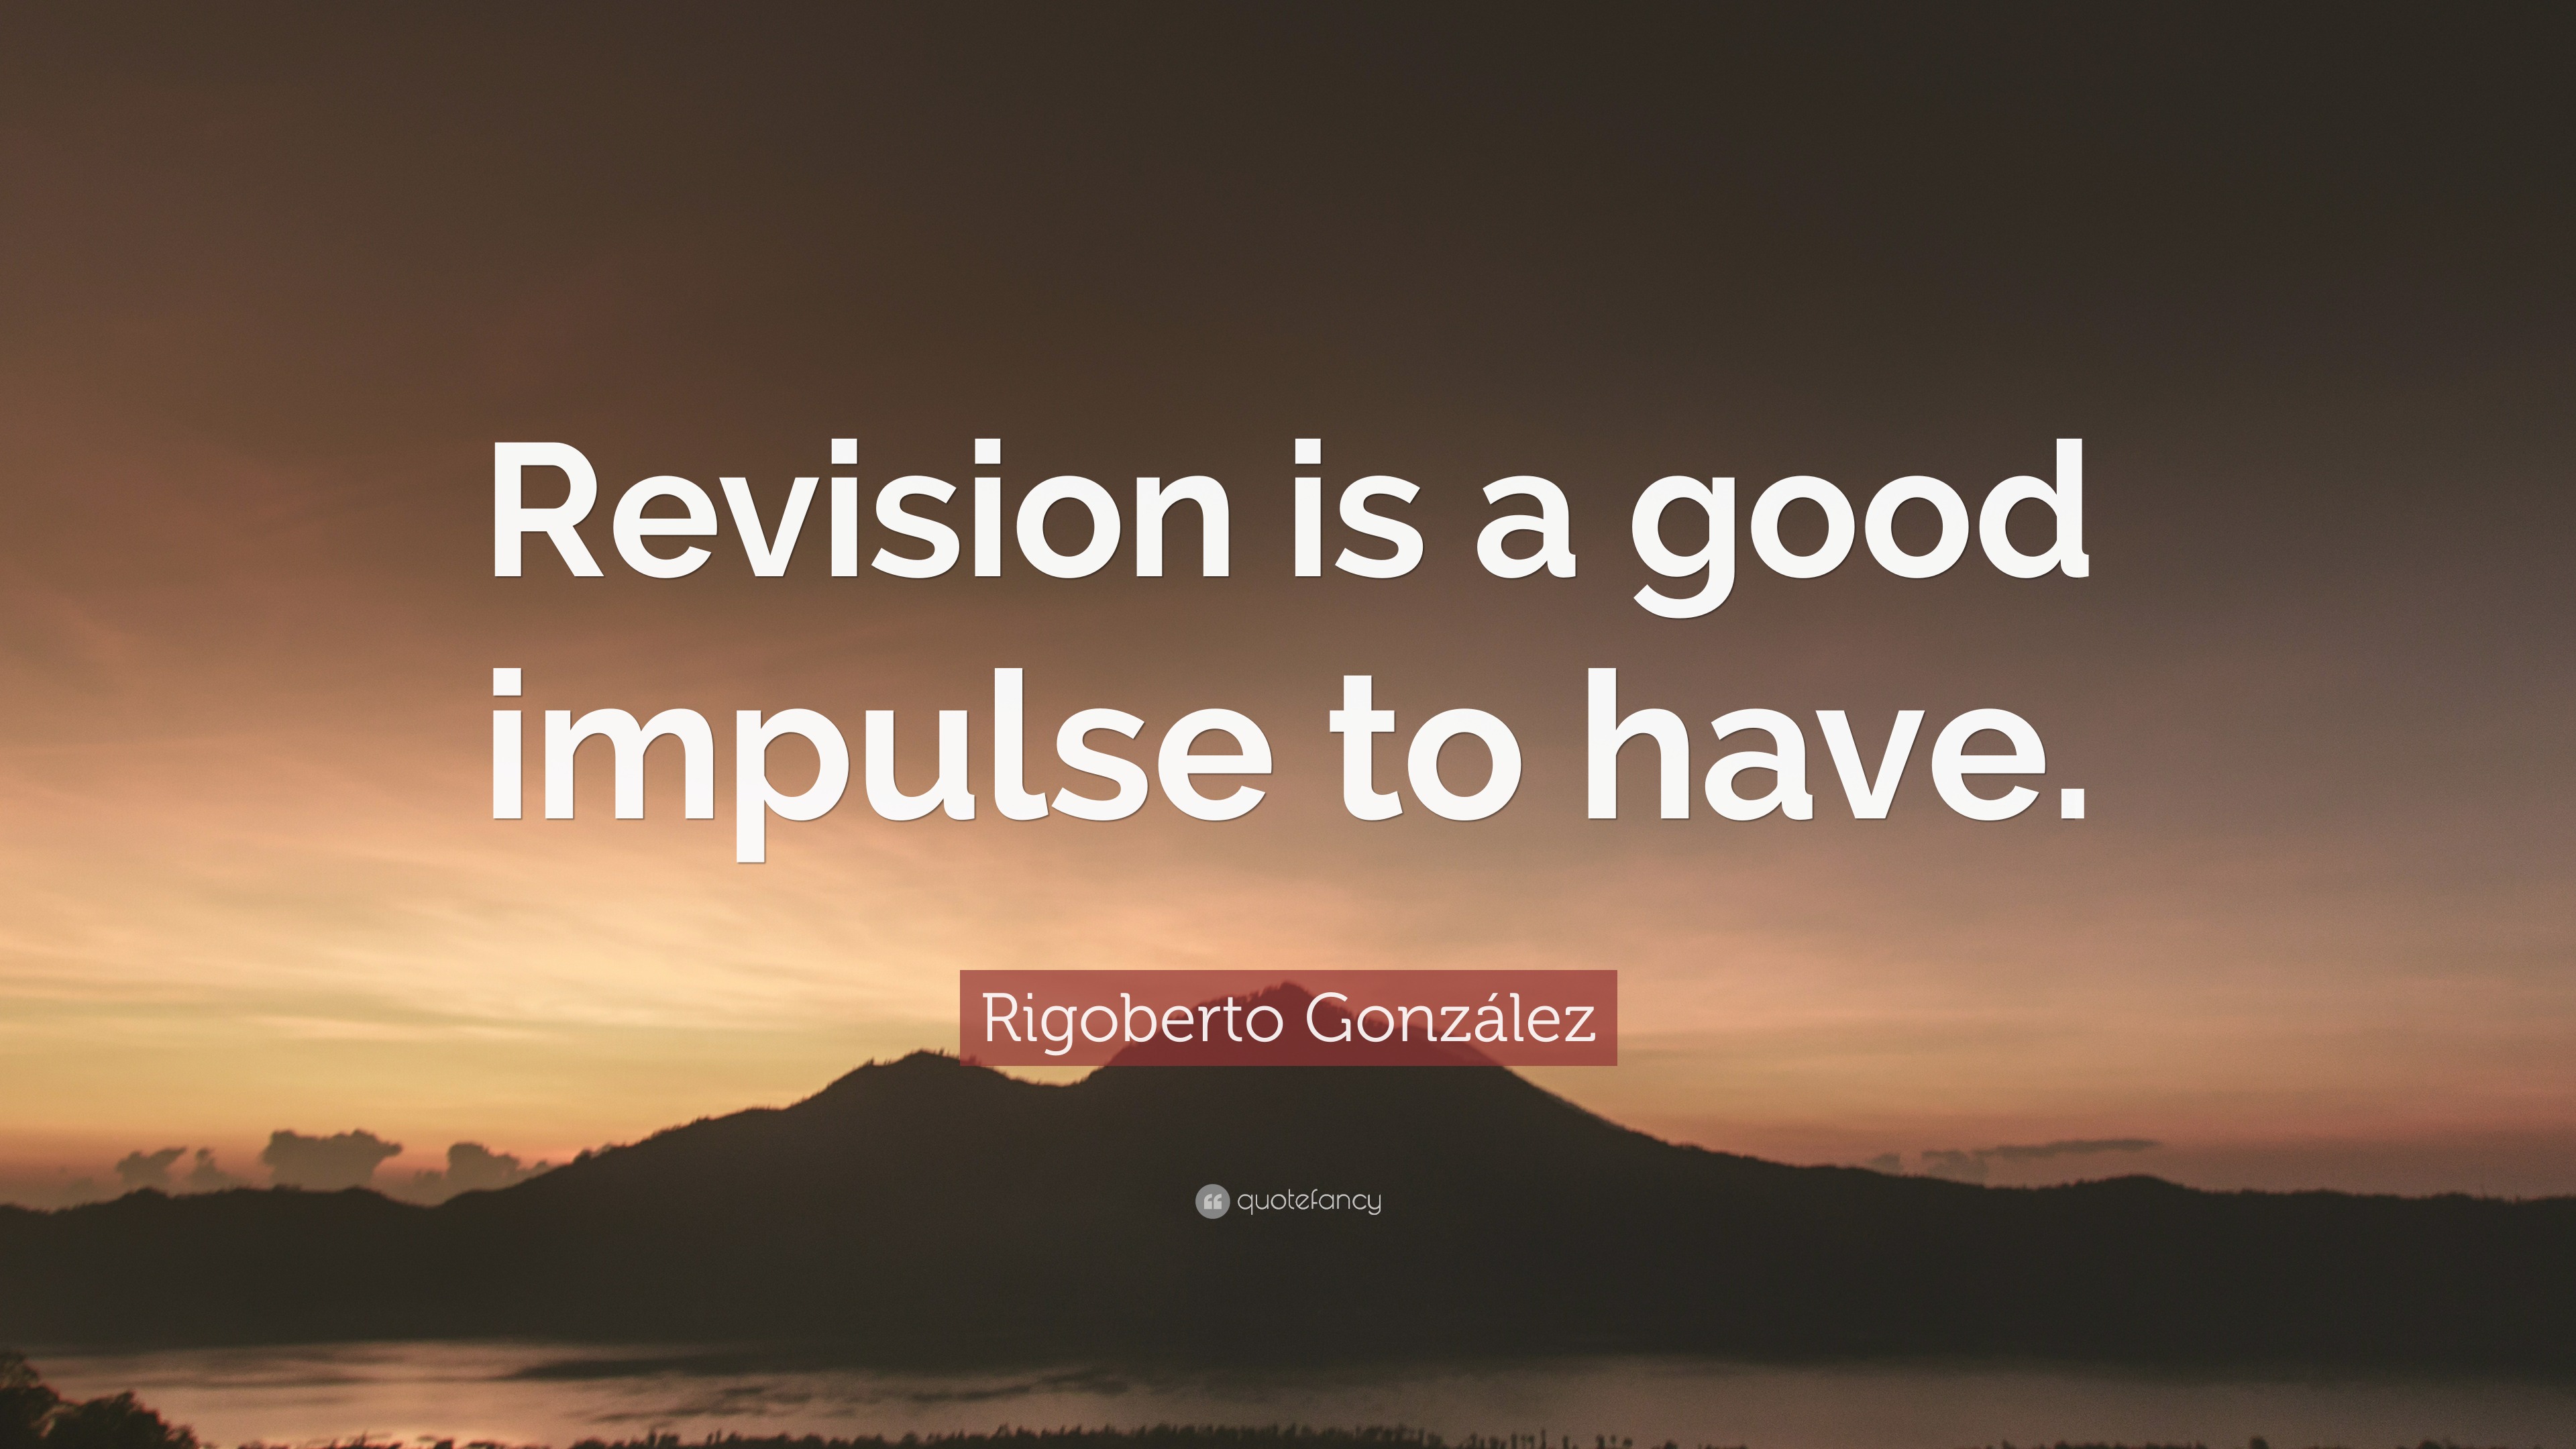 Rigoberto González Quote: "Revision is a good impulse to have."